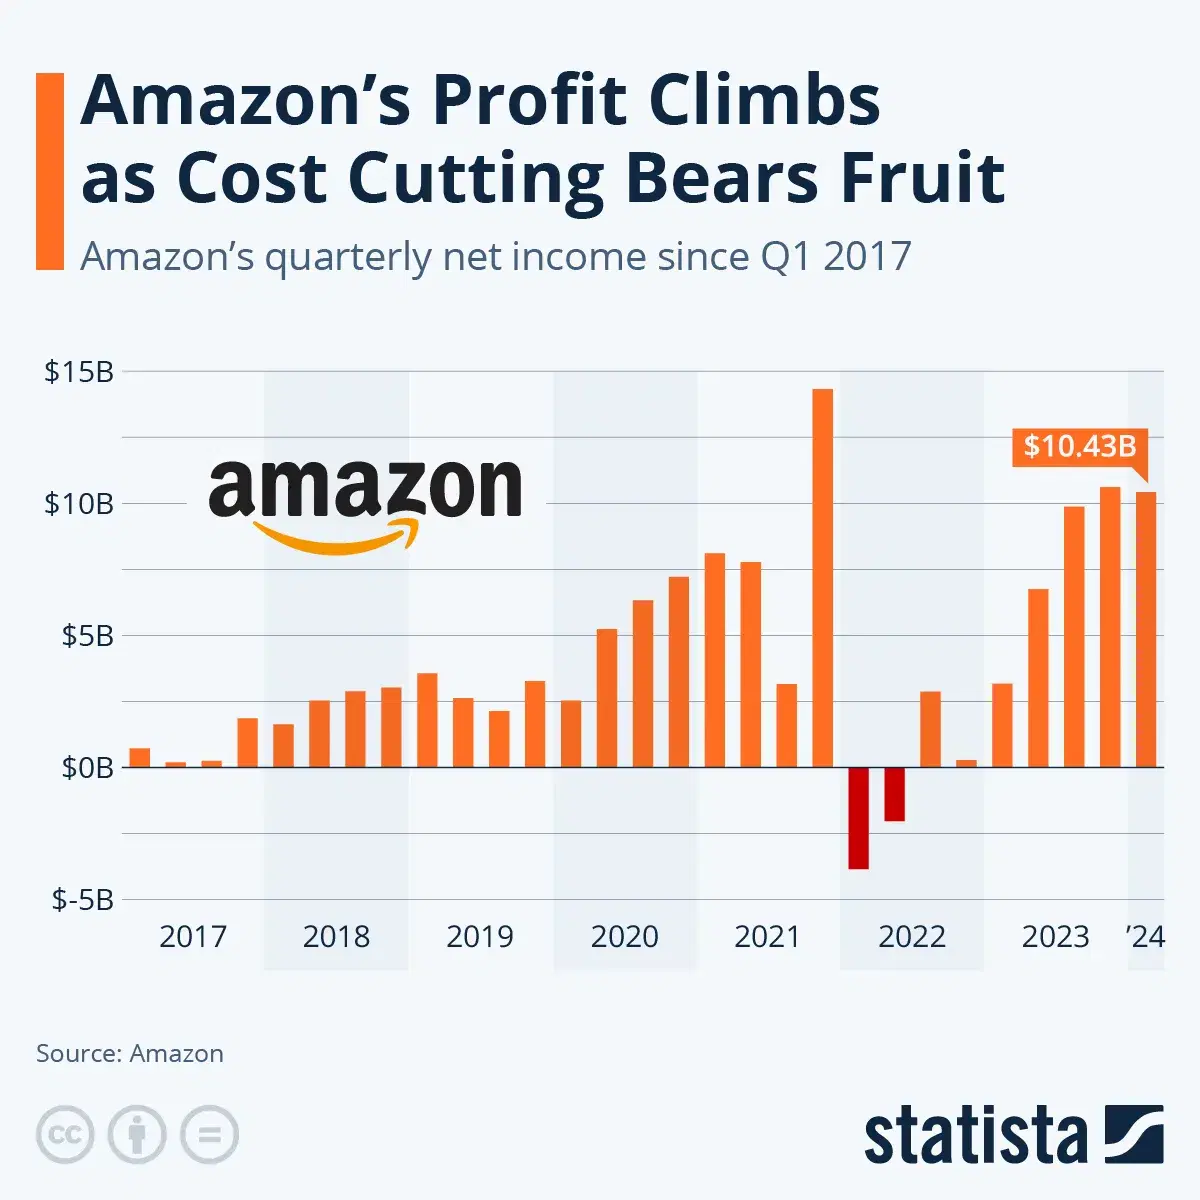 Amazon's Profit Climbs as Cost Cutting Bears Fruit